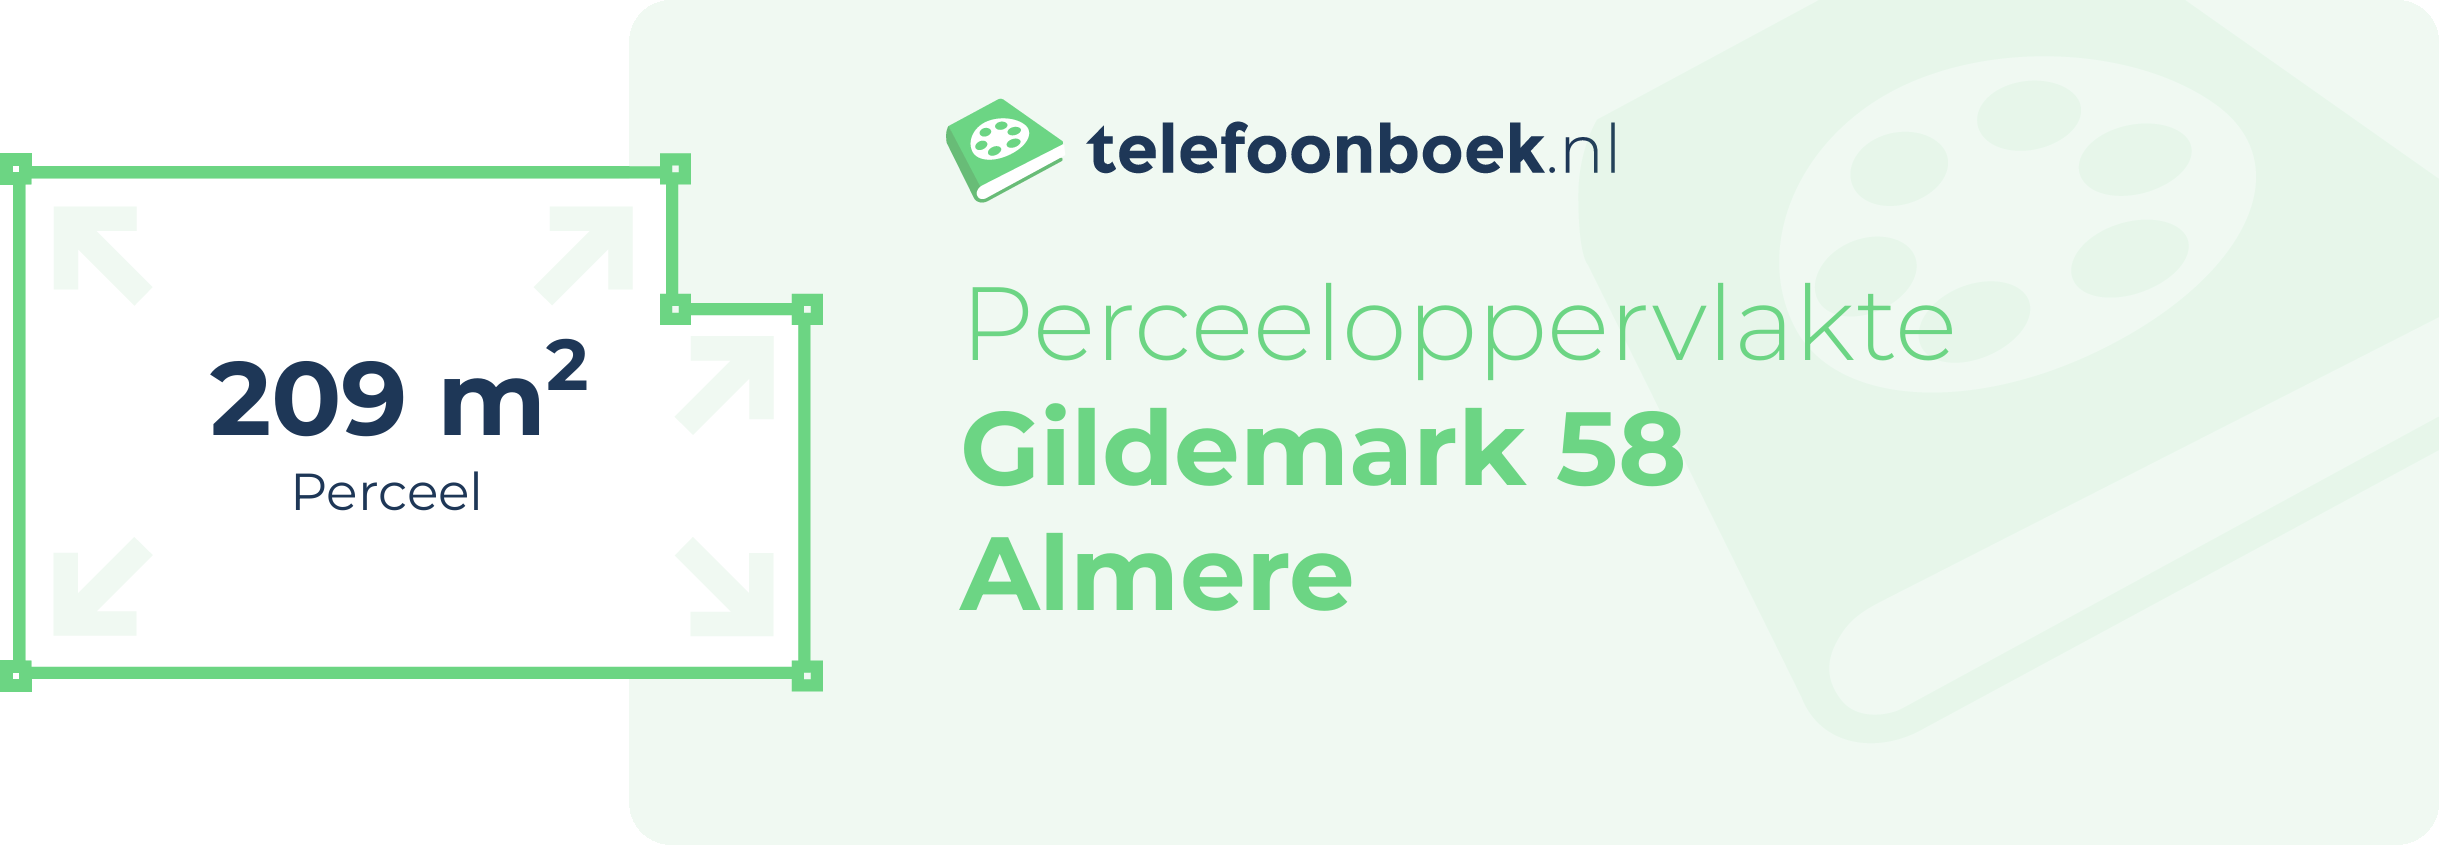 Perceeloppervlakte Gildemark 58 Almere